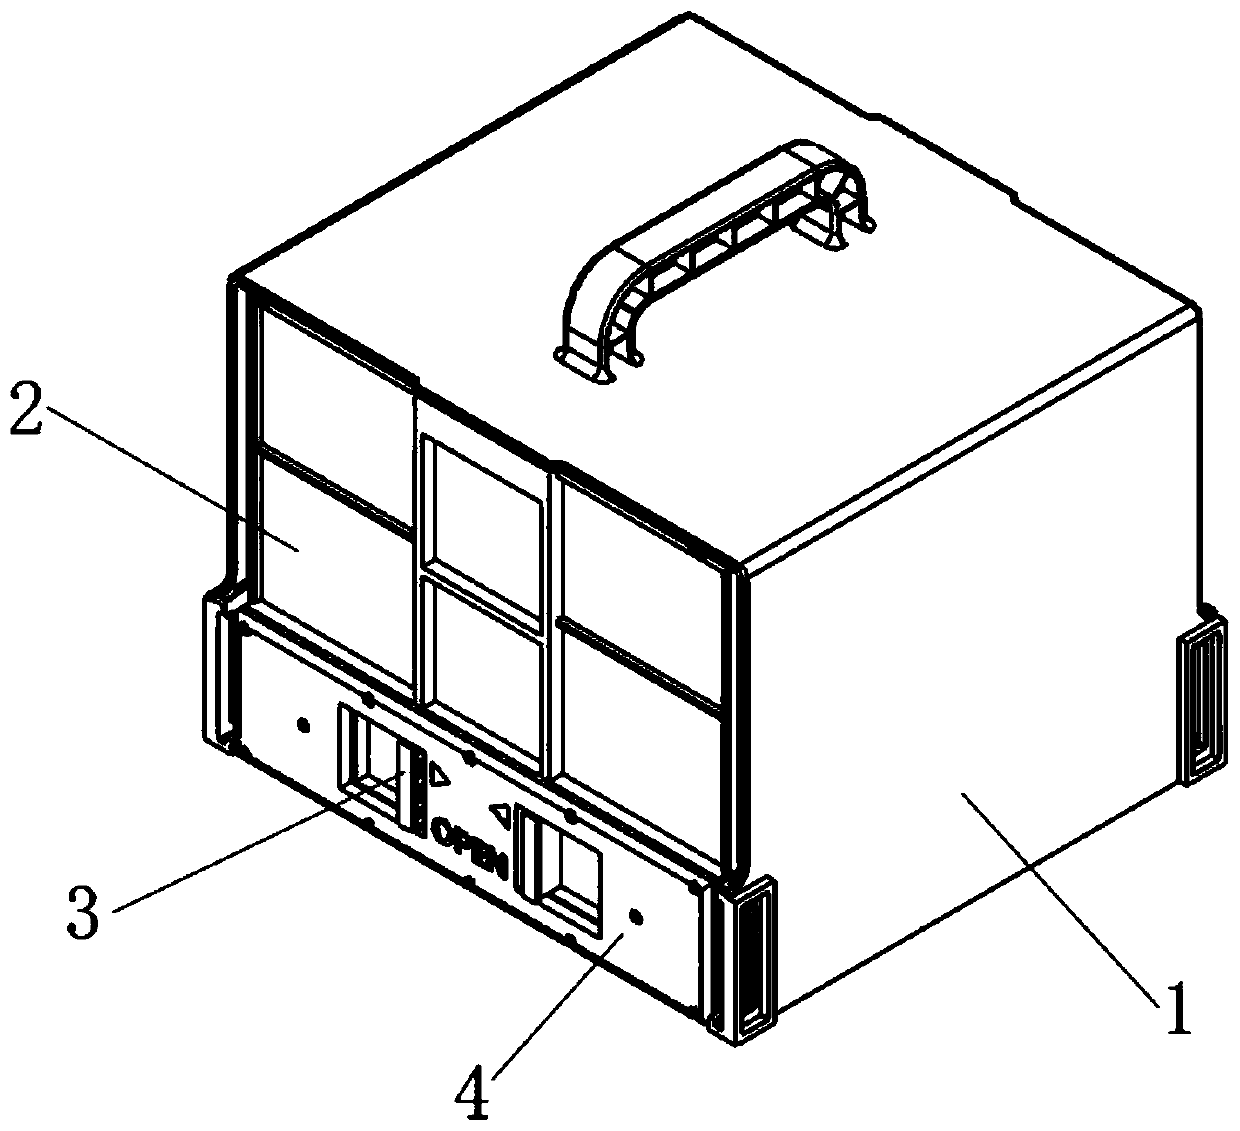 Distribution transport box and automatic distribution vehicle